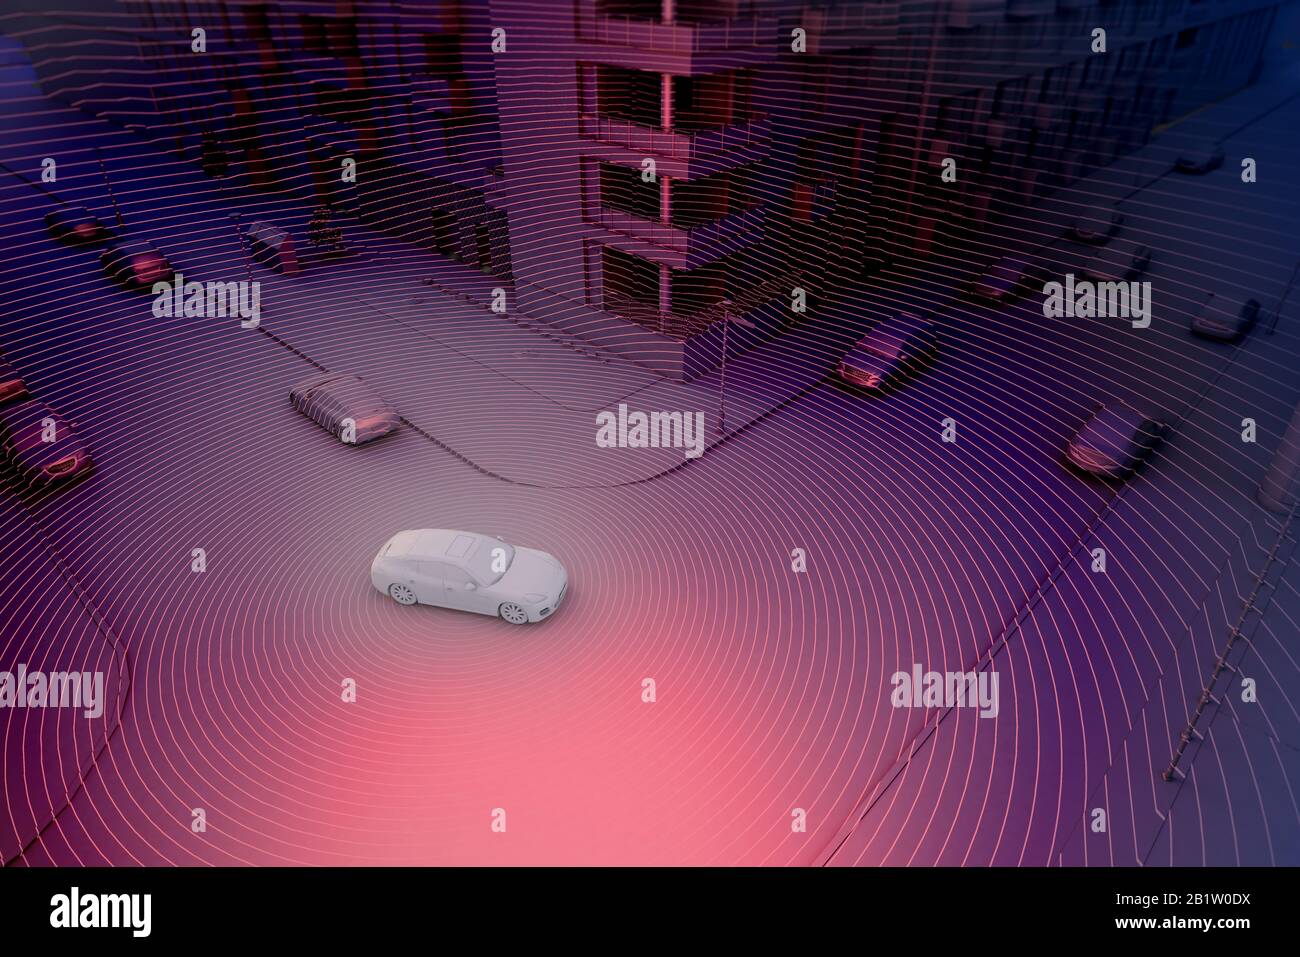 Autonomous driving concept illustration - 3d rendering showing lidar sensor use Stock Photo